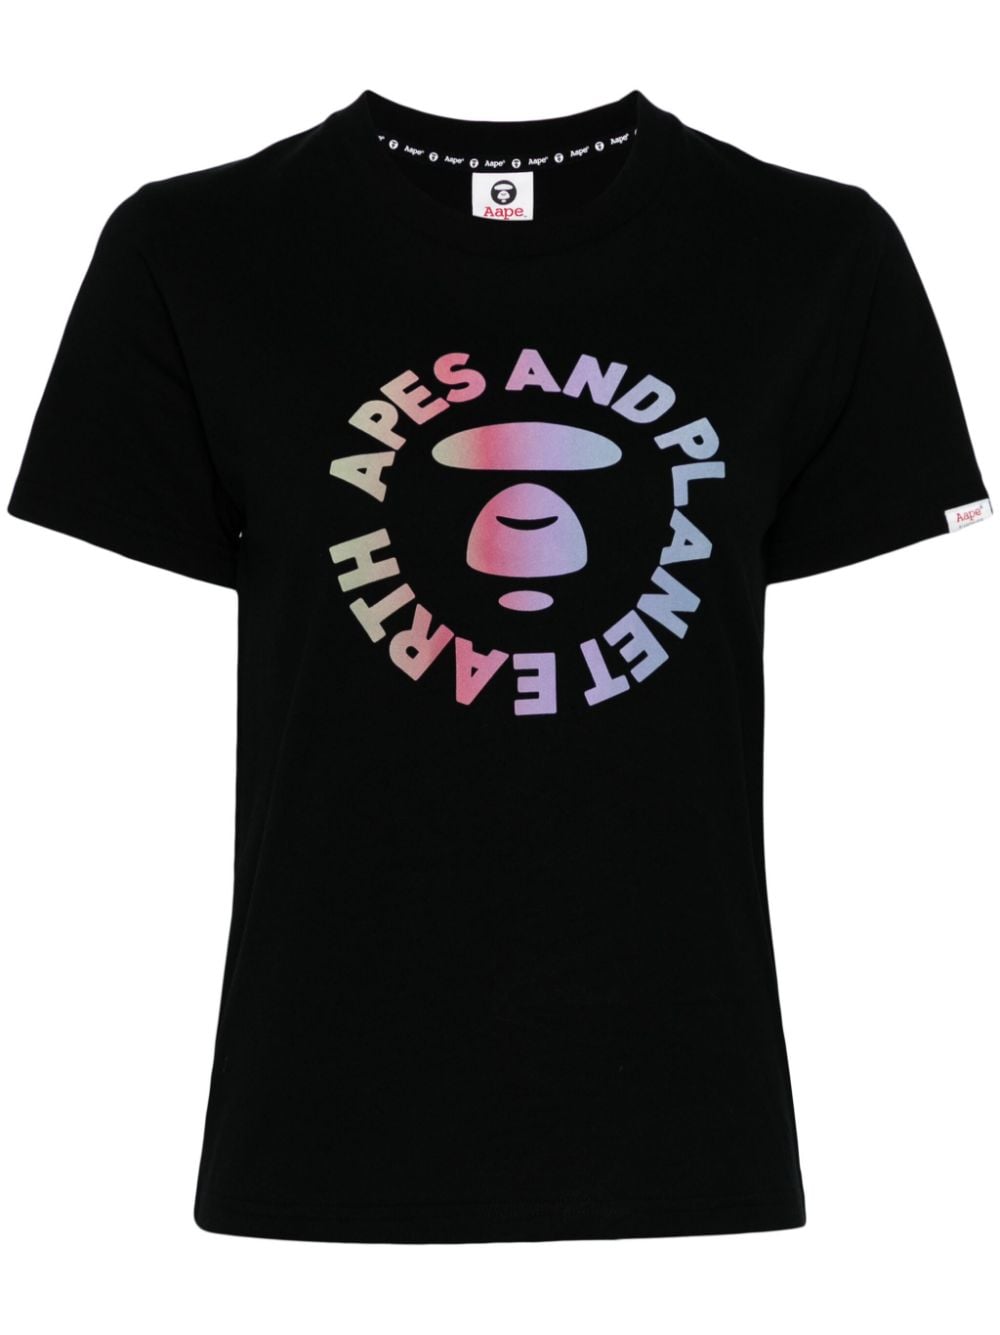 AAPE BY *A BATHING APE® logo-print cotton T-shirt - Black von AAPE BY *A BATHING APE®